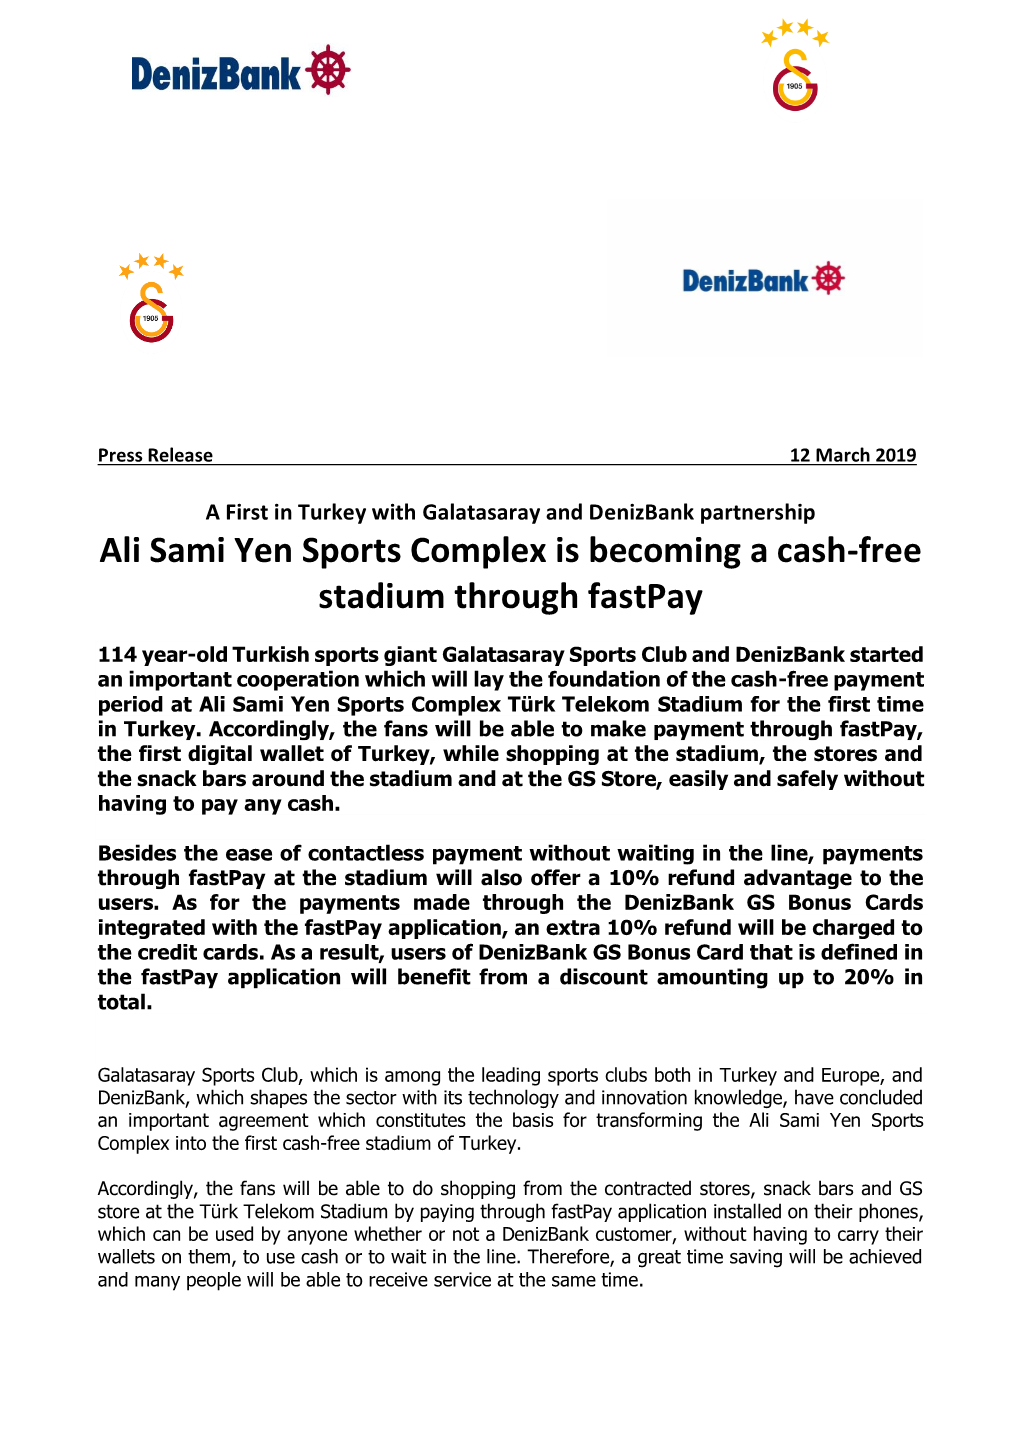 Ali Sami Yen Sports Complex Is Becoming a Cash-Free Stadium Through Fastpay